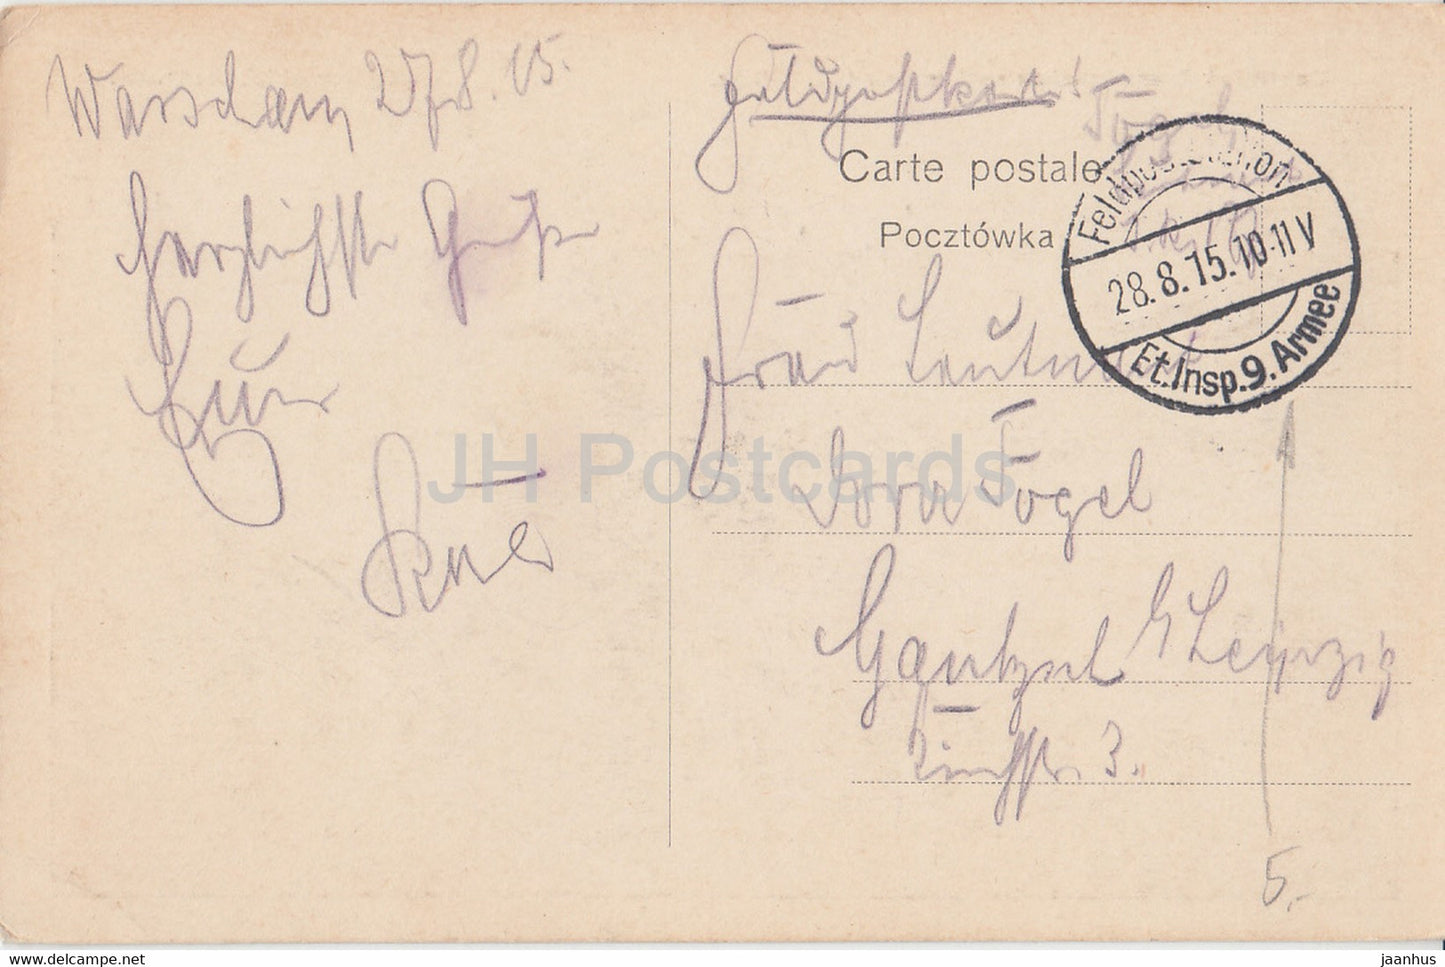 Ueberblick uber Warschau und Praga mit 2 Brucke - Ogolny widok Warszawy - Feldpost - carte postale ancienne - 1915 - Pologne - utilisé